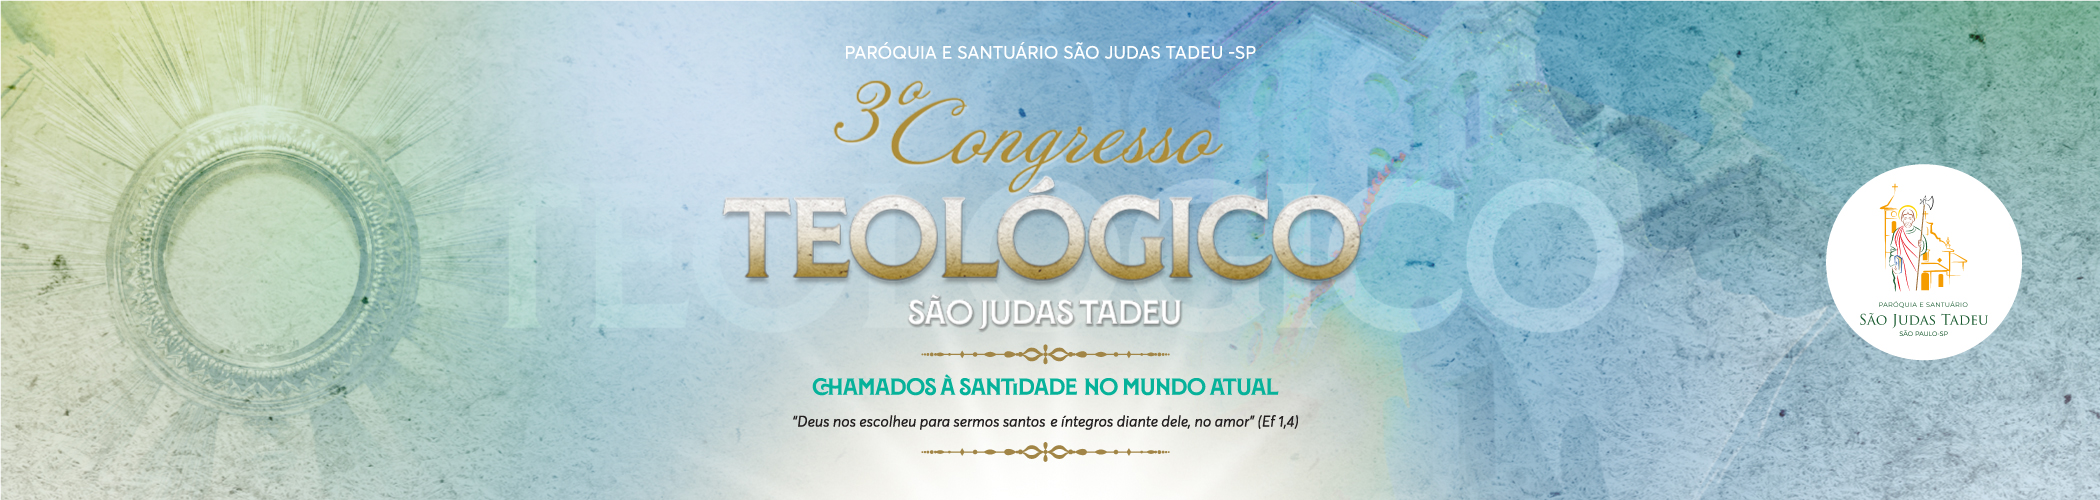 Banner 3º Congresso Teológico